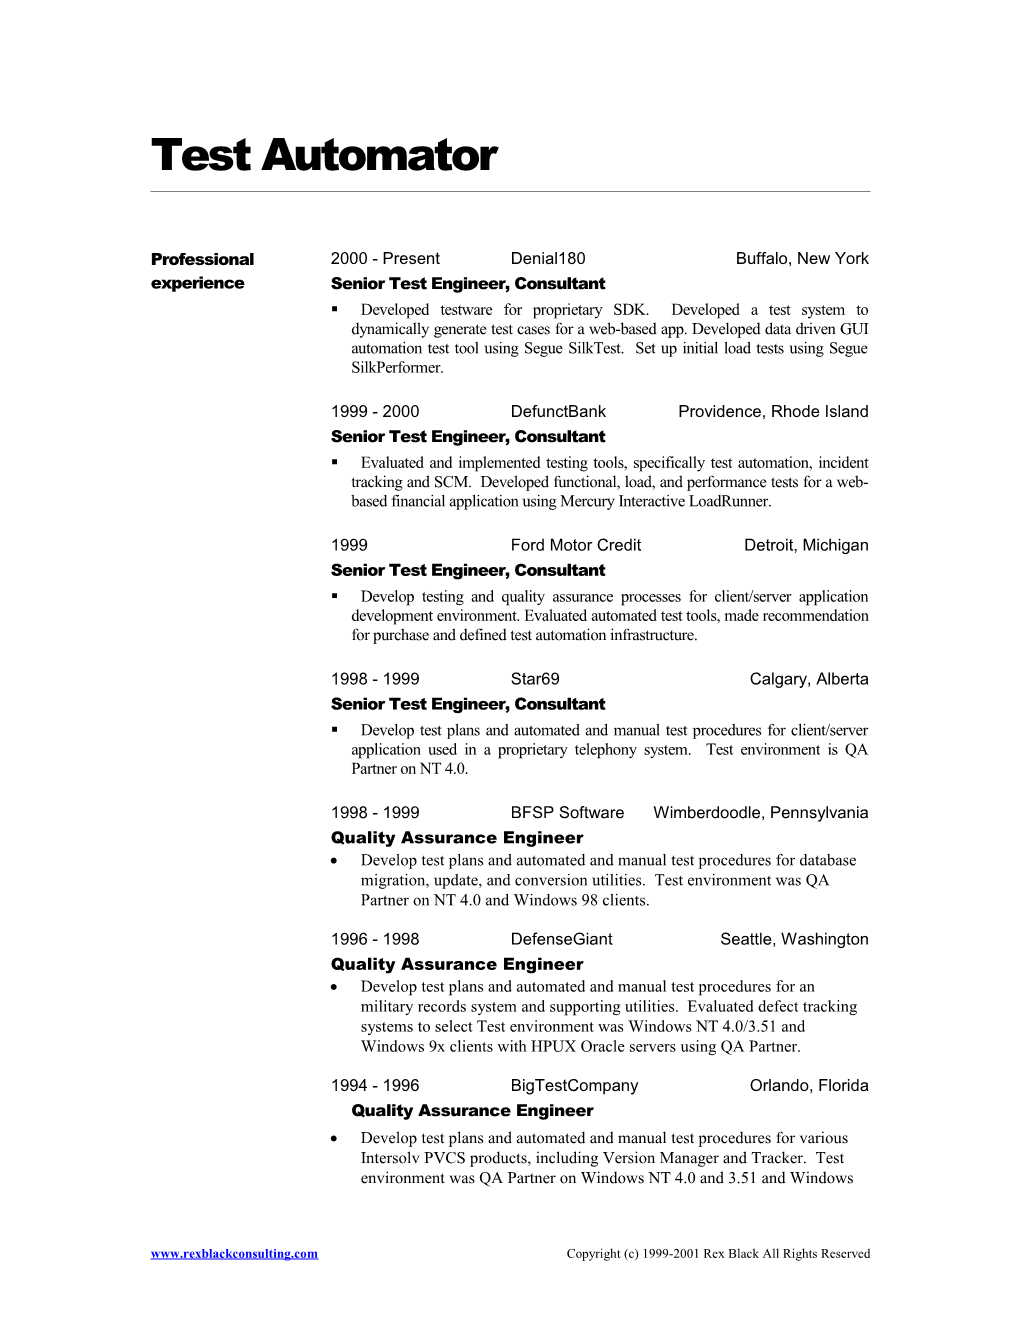 Test Automator